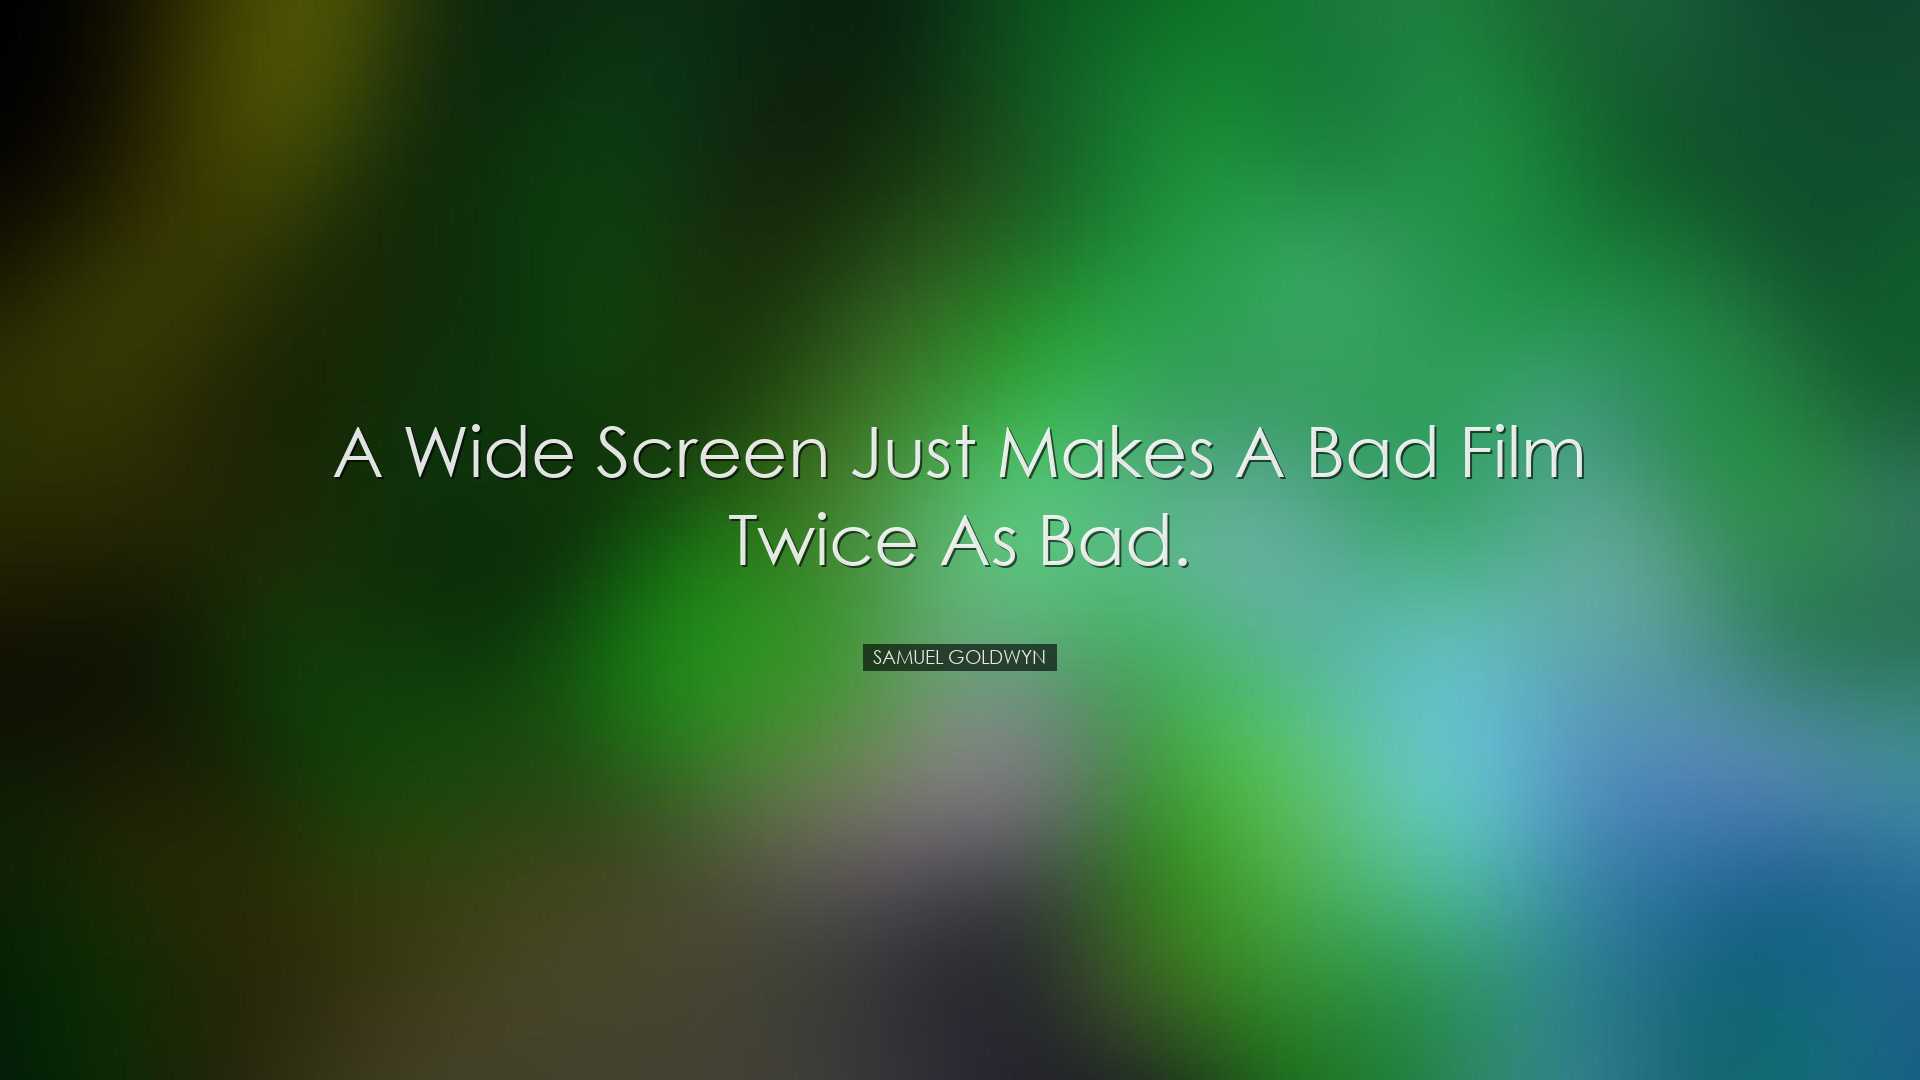 A wide screen just makes a bad film twice as bad. - Samuel Goldwyn